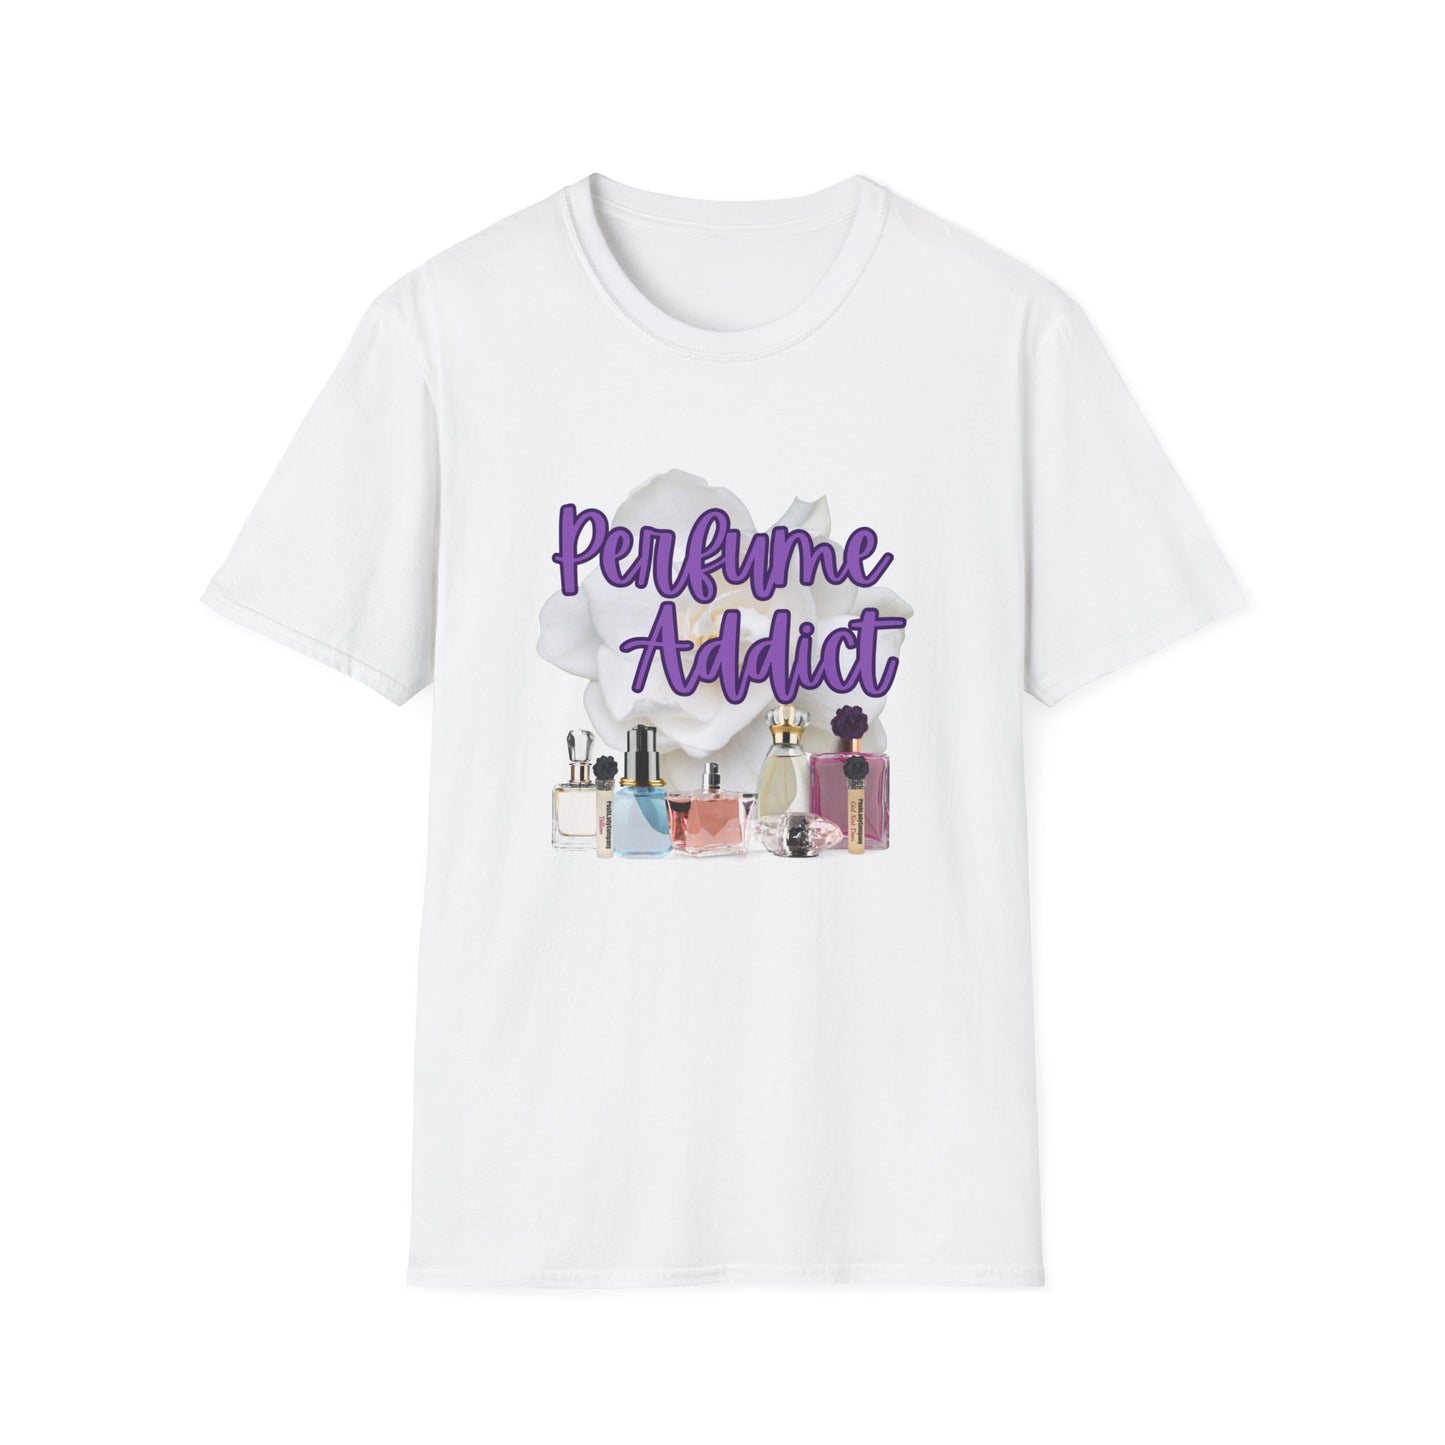 Perfume Addict T-shirt